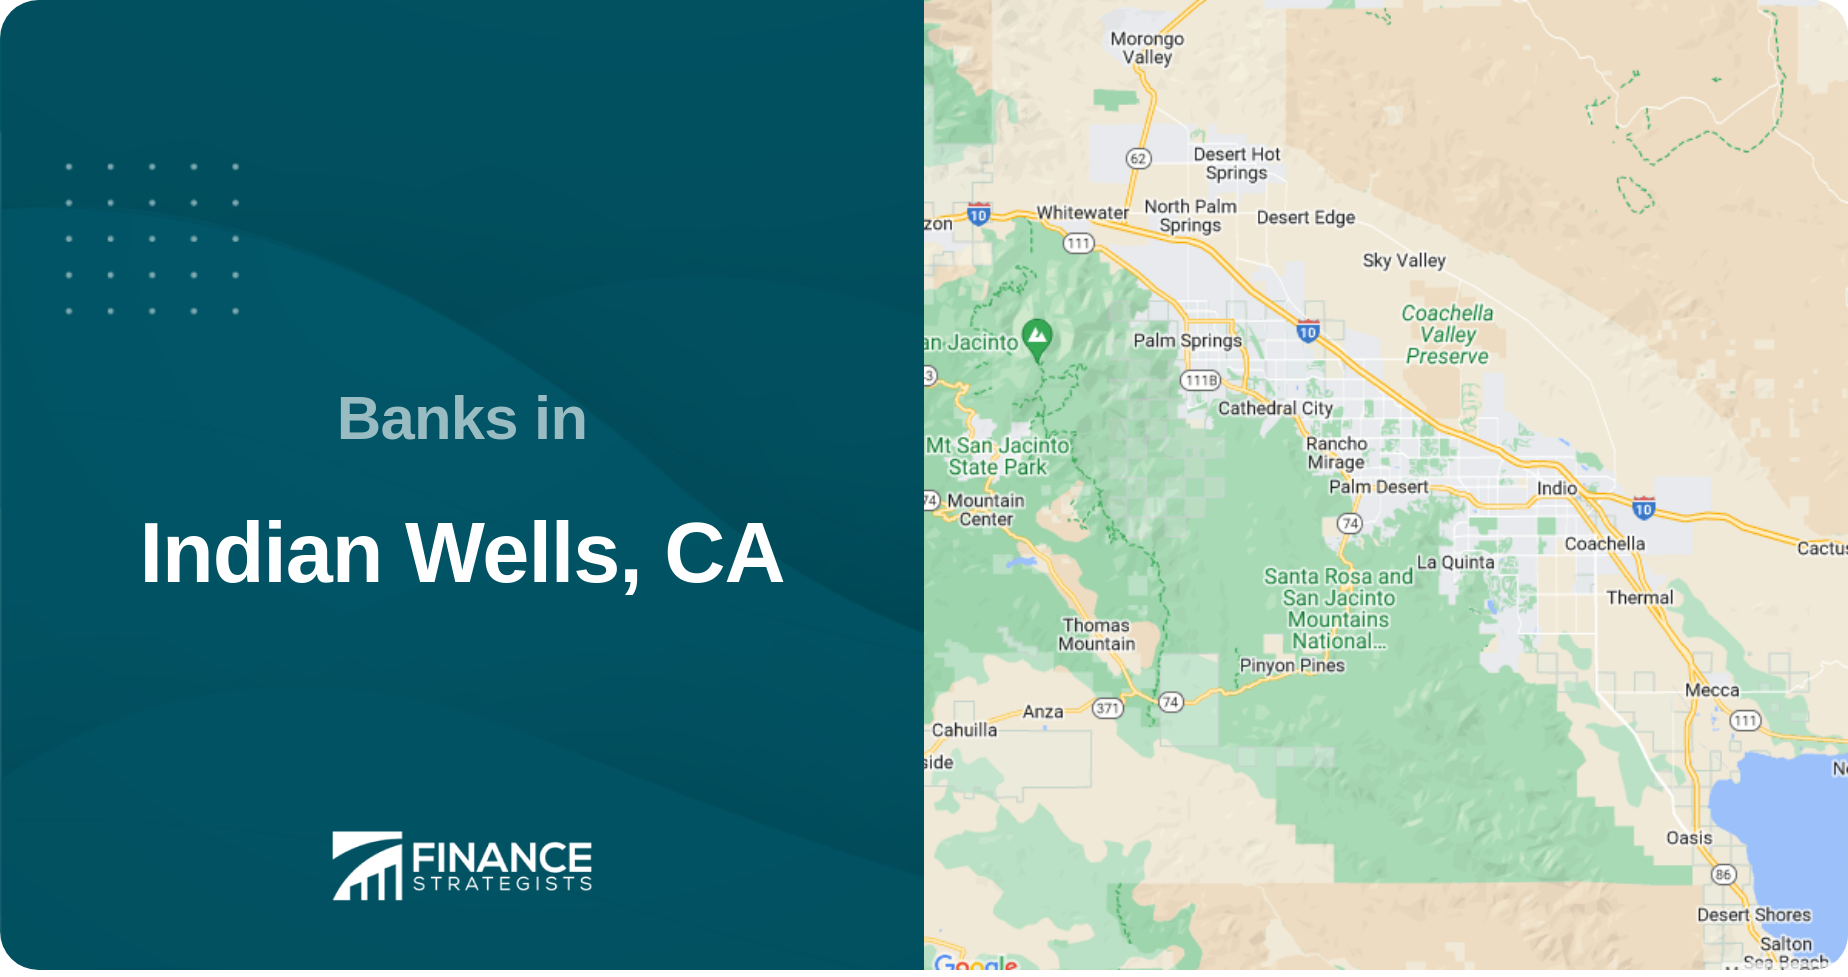 Banks in Indian Wells, CA